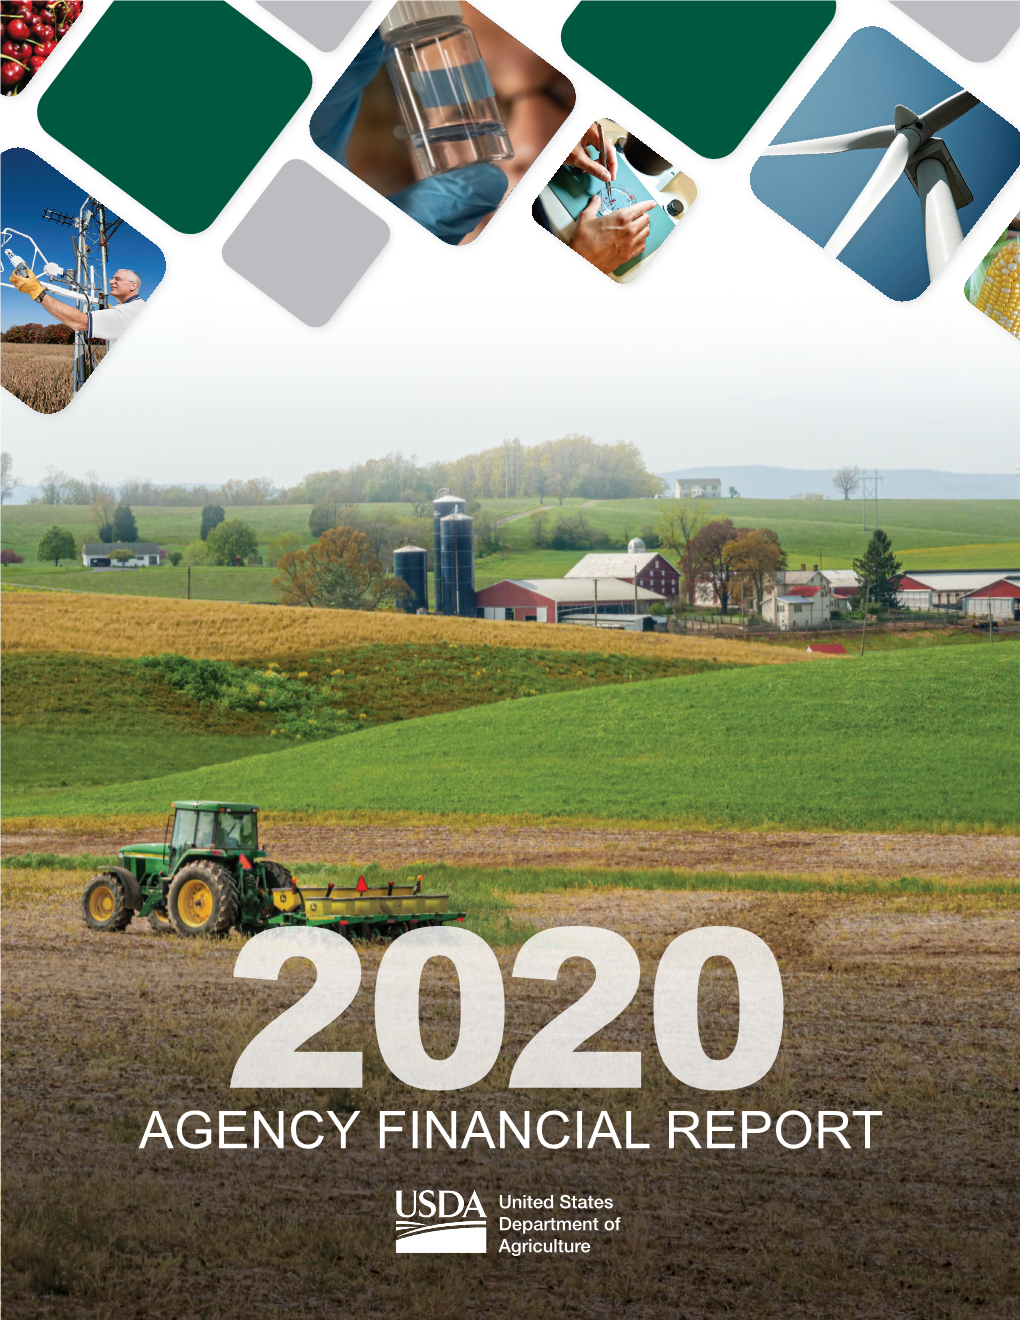 Agency Financial Report